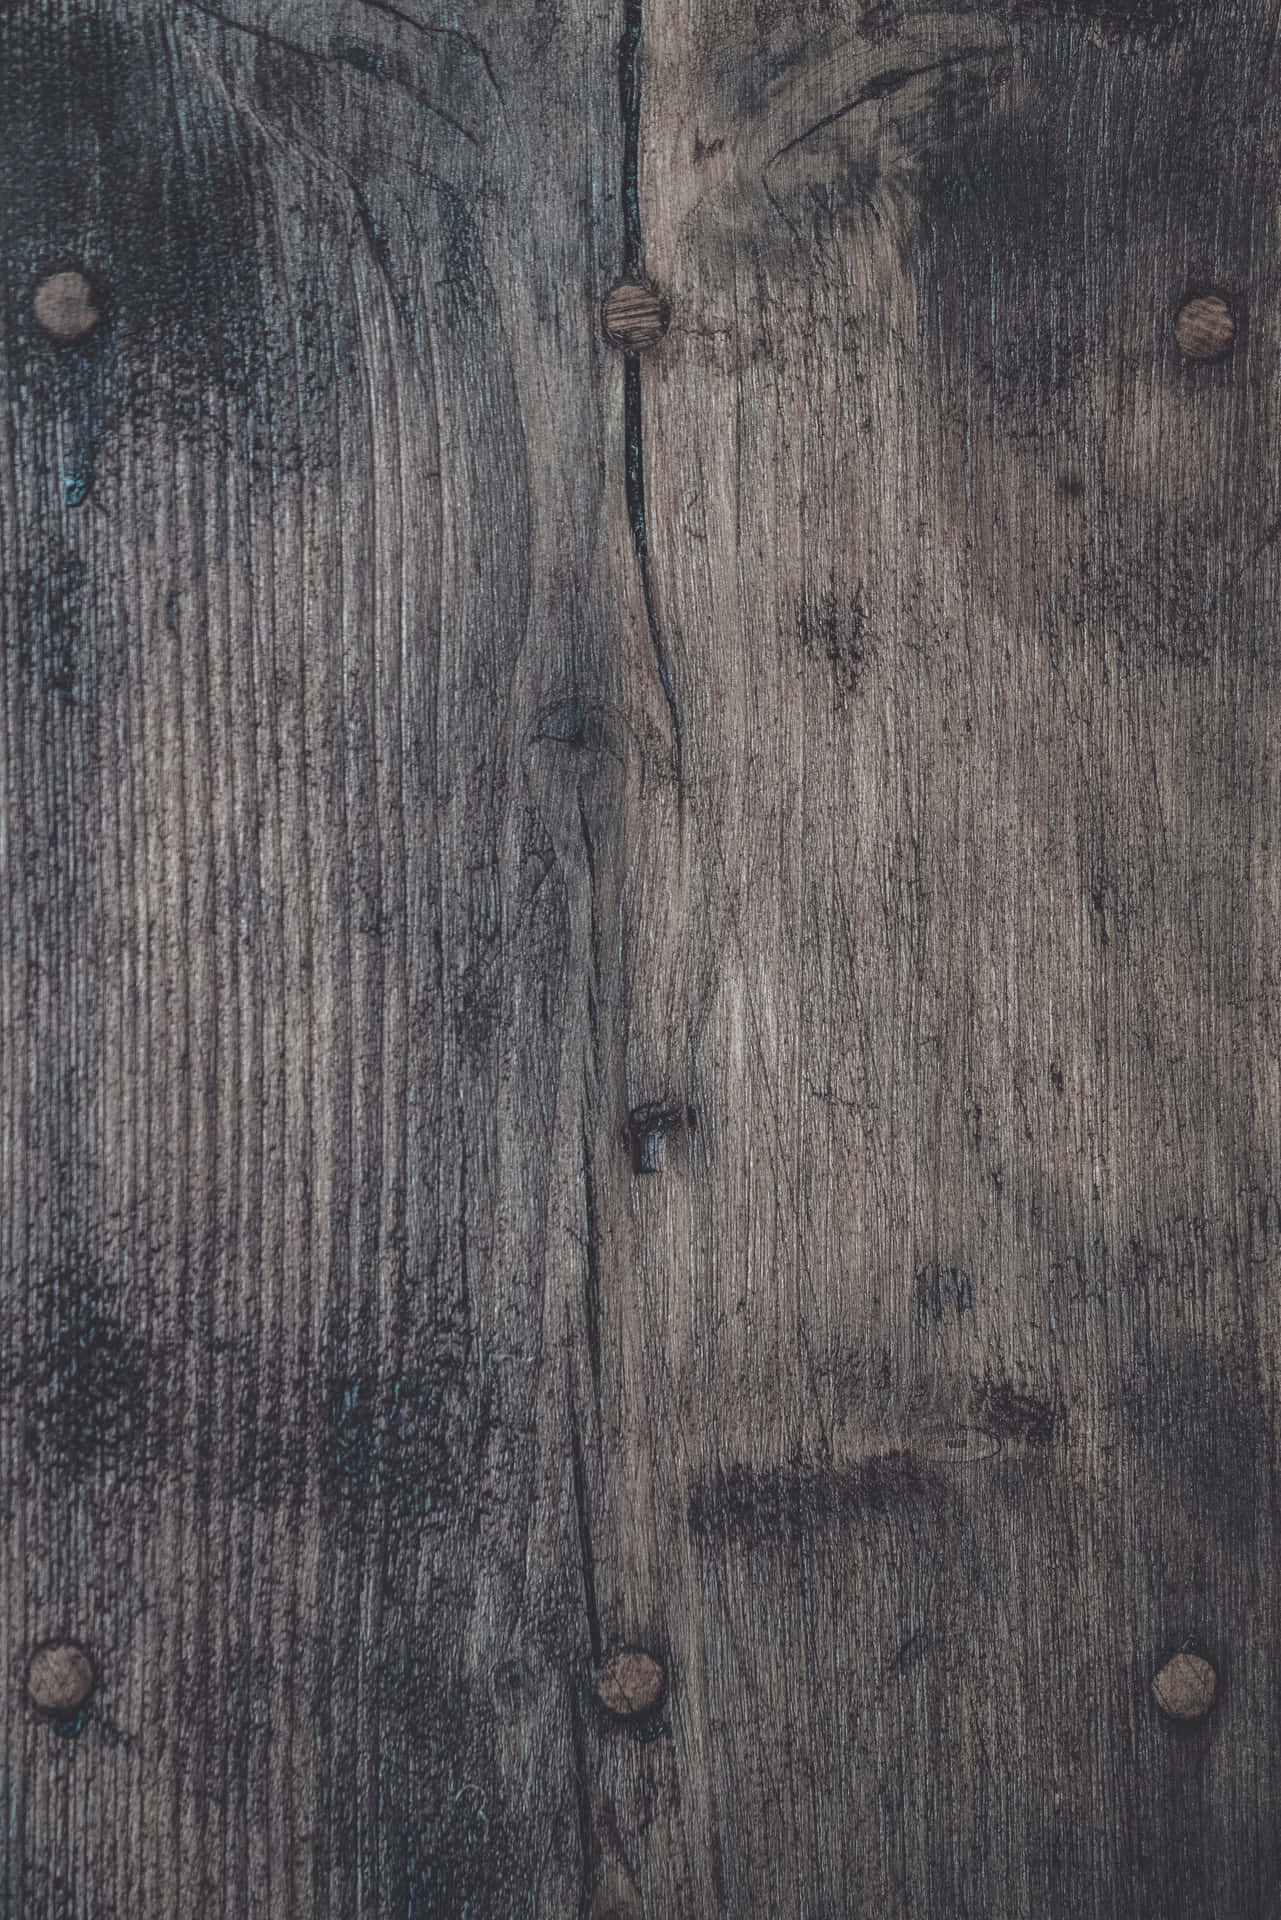 Natural Gray Woodgrain Textured Background